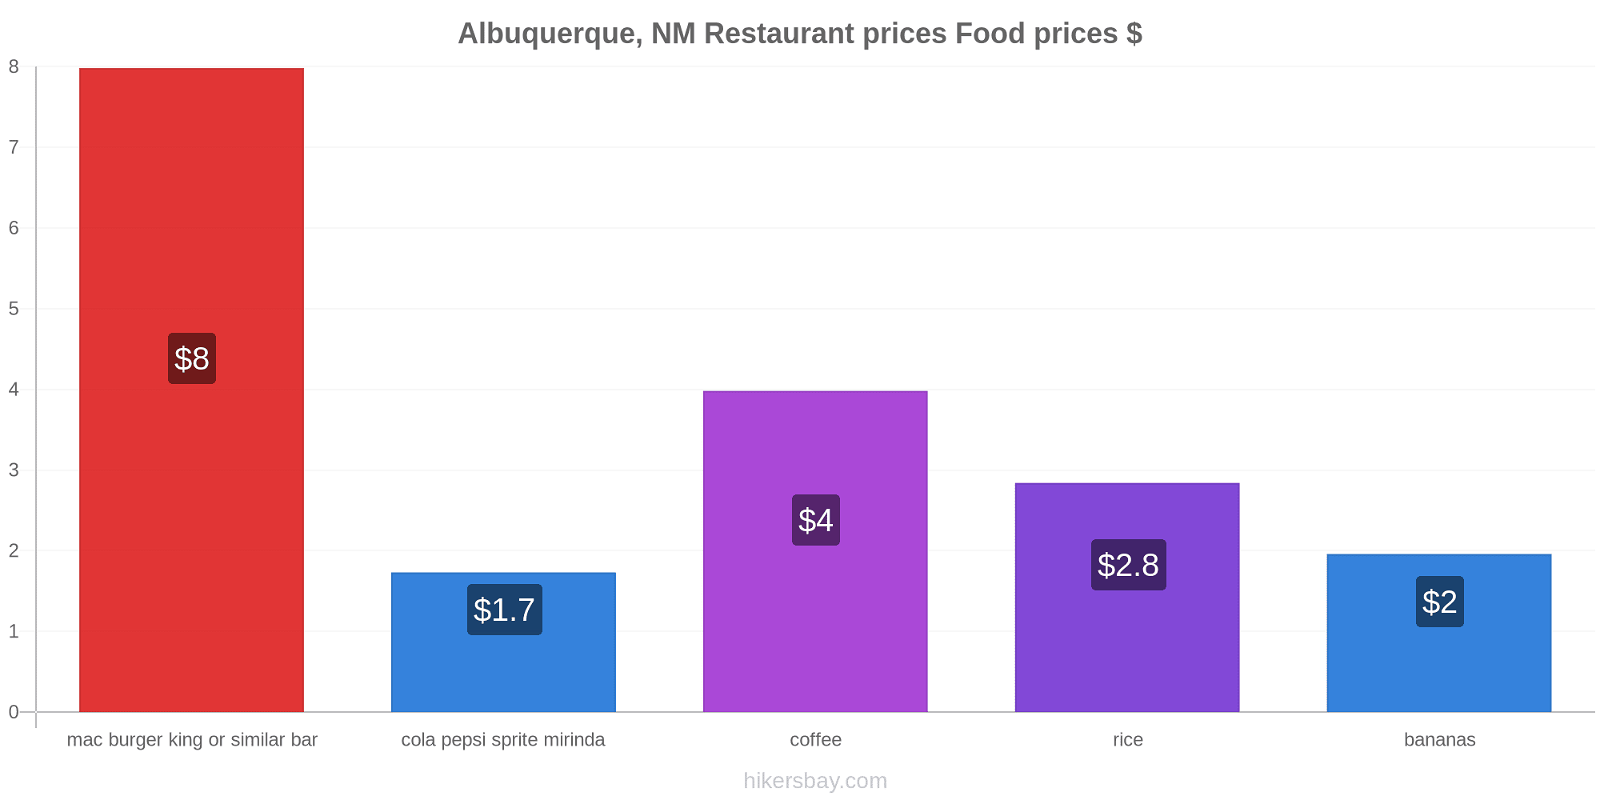 Albuquerque, NM price changes hikersbay.com